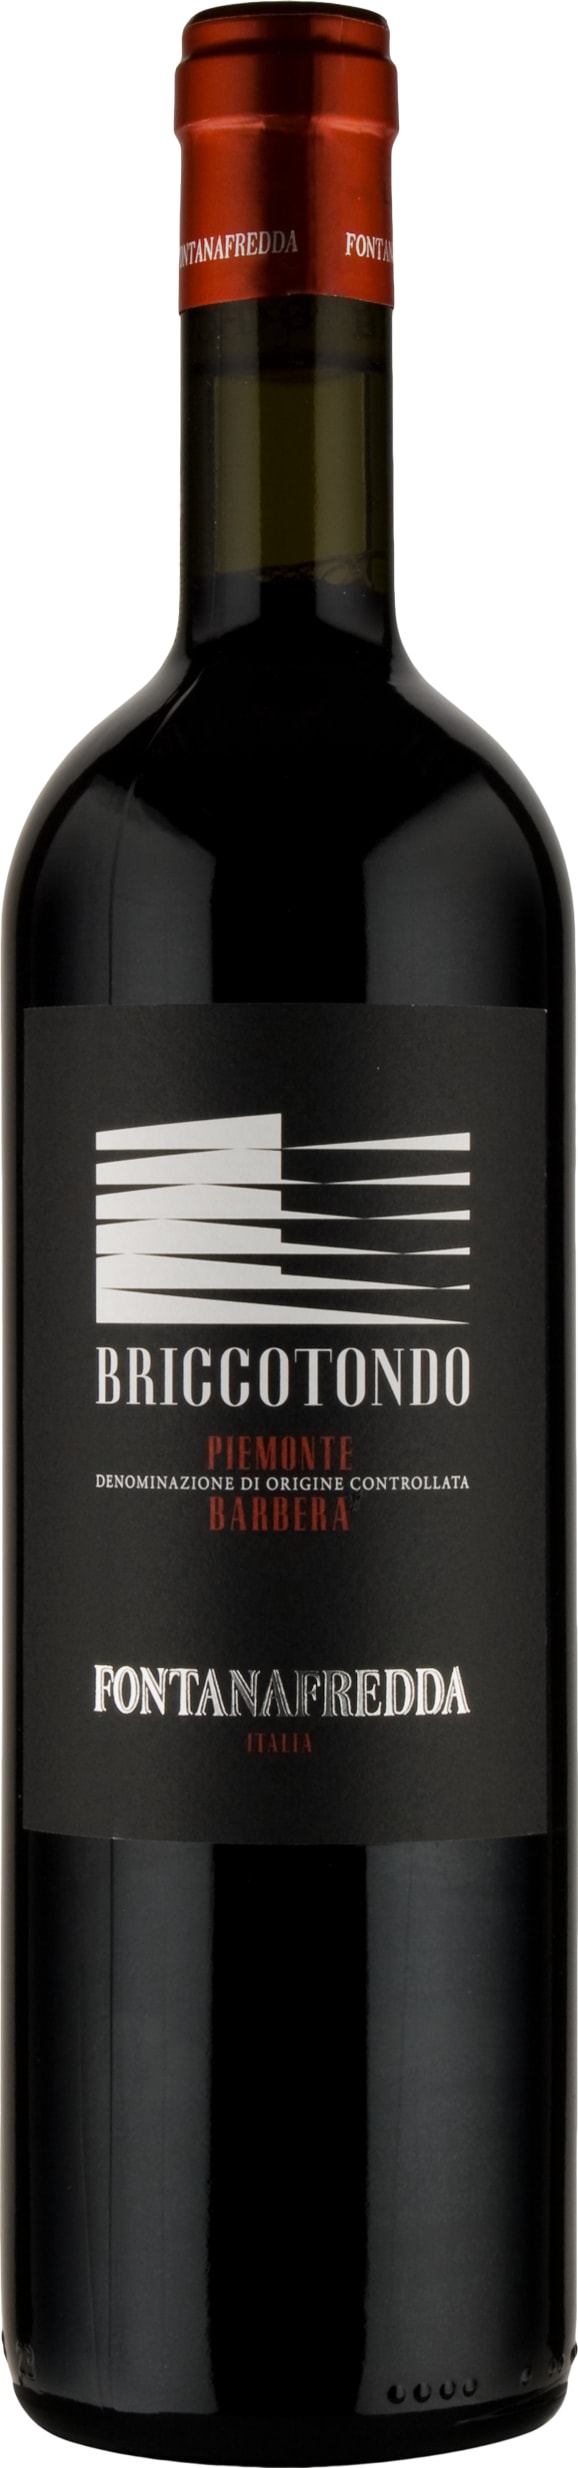 Fontanafredda Briccotondo Barbera Piemonte DOC 2022 75cl - Buy Fontanafredda Wines from GREAT WINES DIRECT wine shop